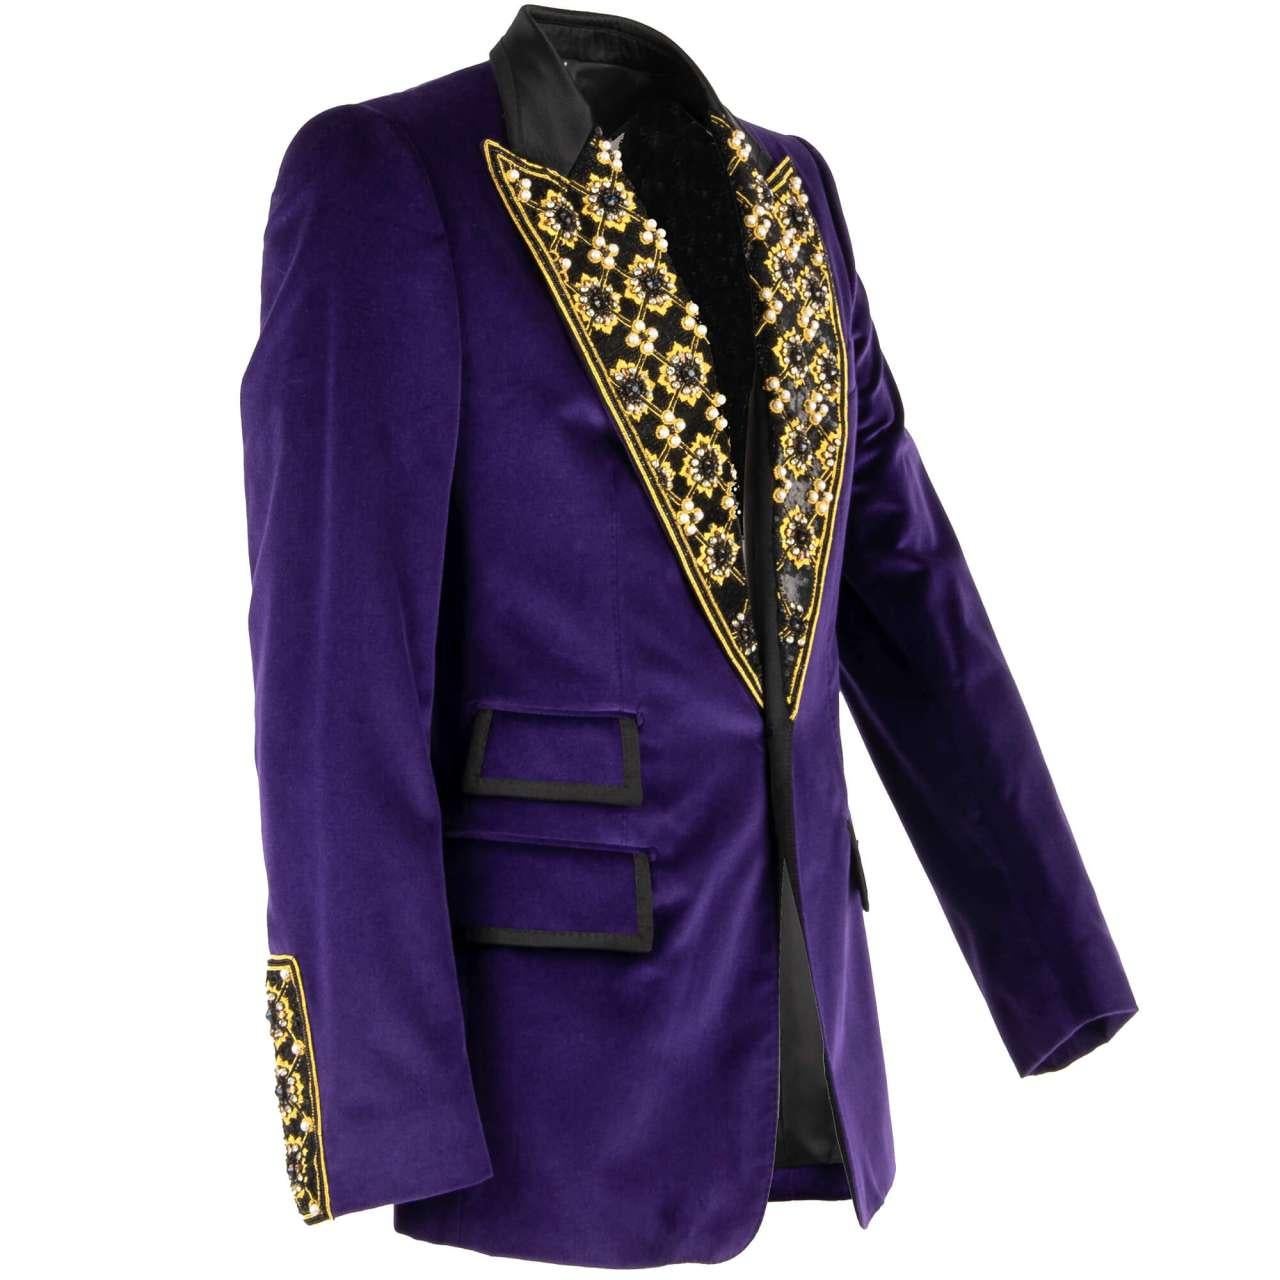 D&G Velvet Tuxedo Blazer with Crystals, Pearls and Sequins Purple Black 46 In Excellent Condition For Sale In Erkrath, DE